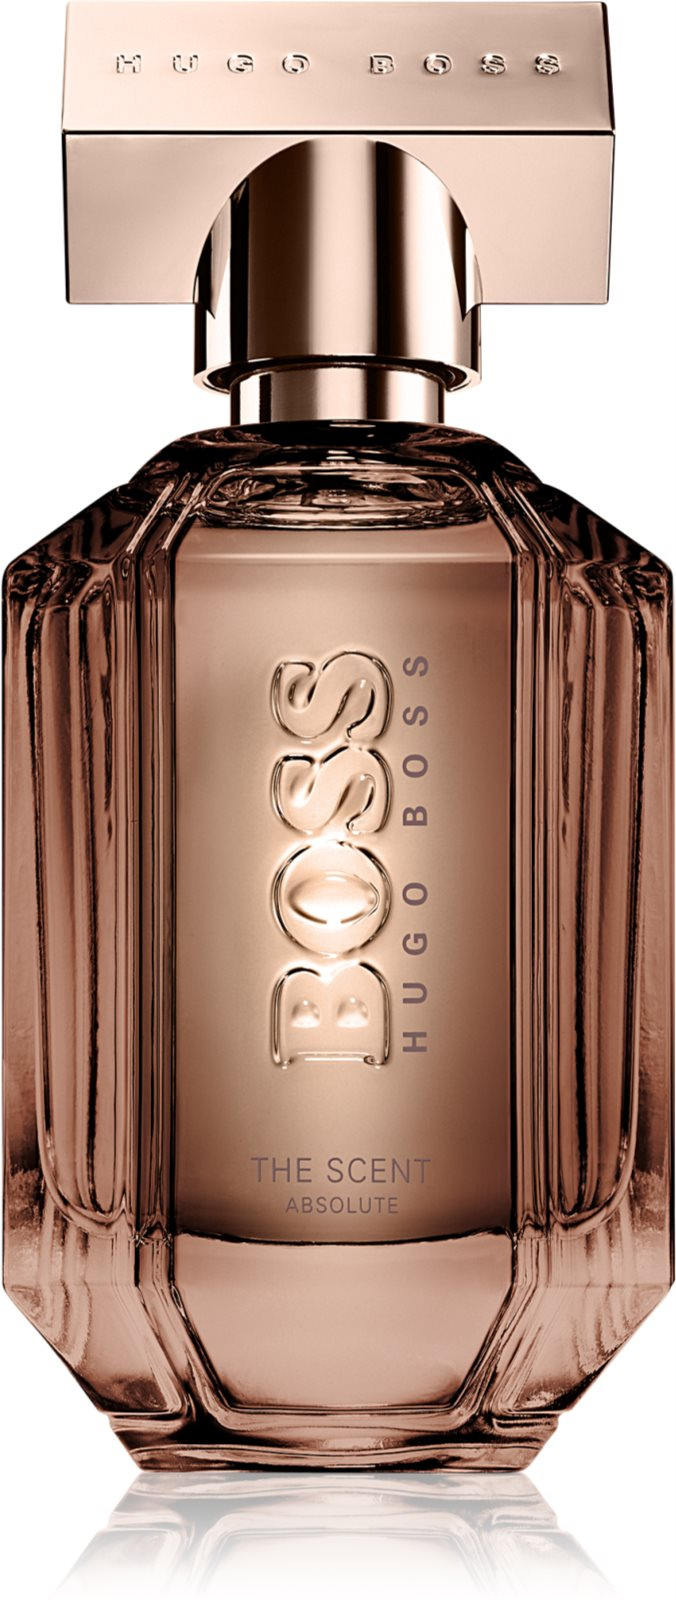 Hugo Boss The Scent Absolute For Her Eau de Parfum 50ml